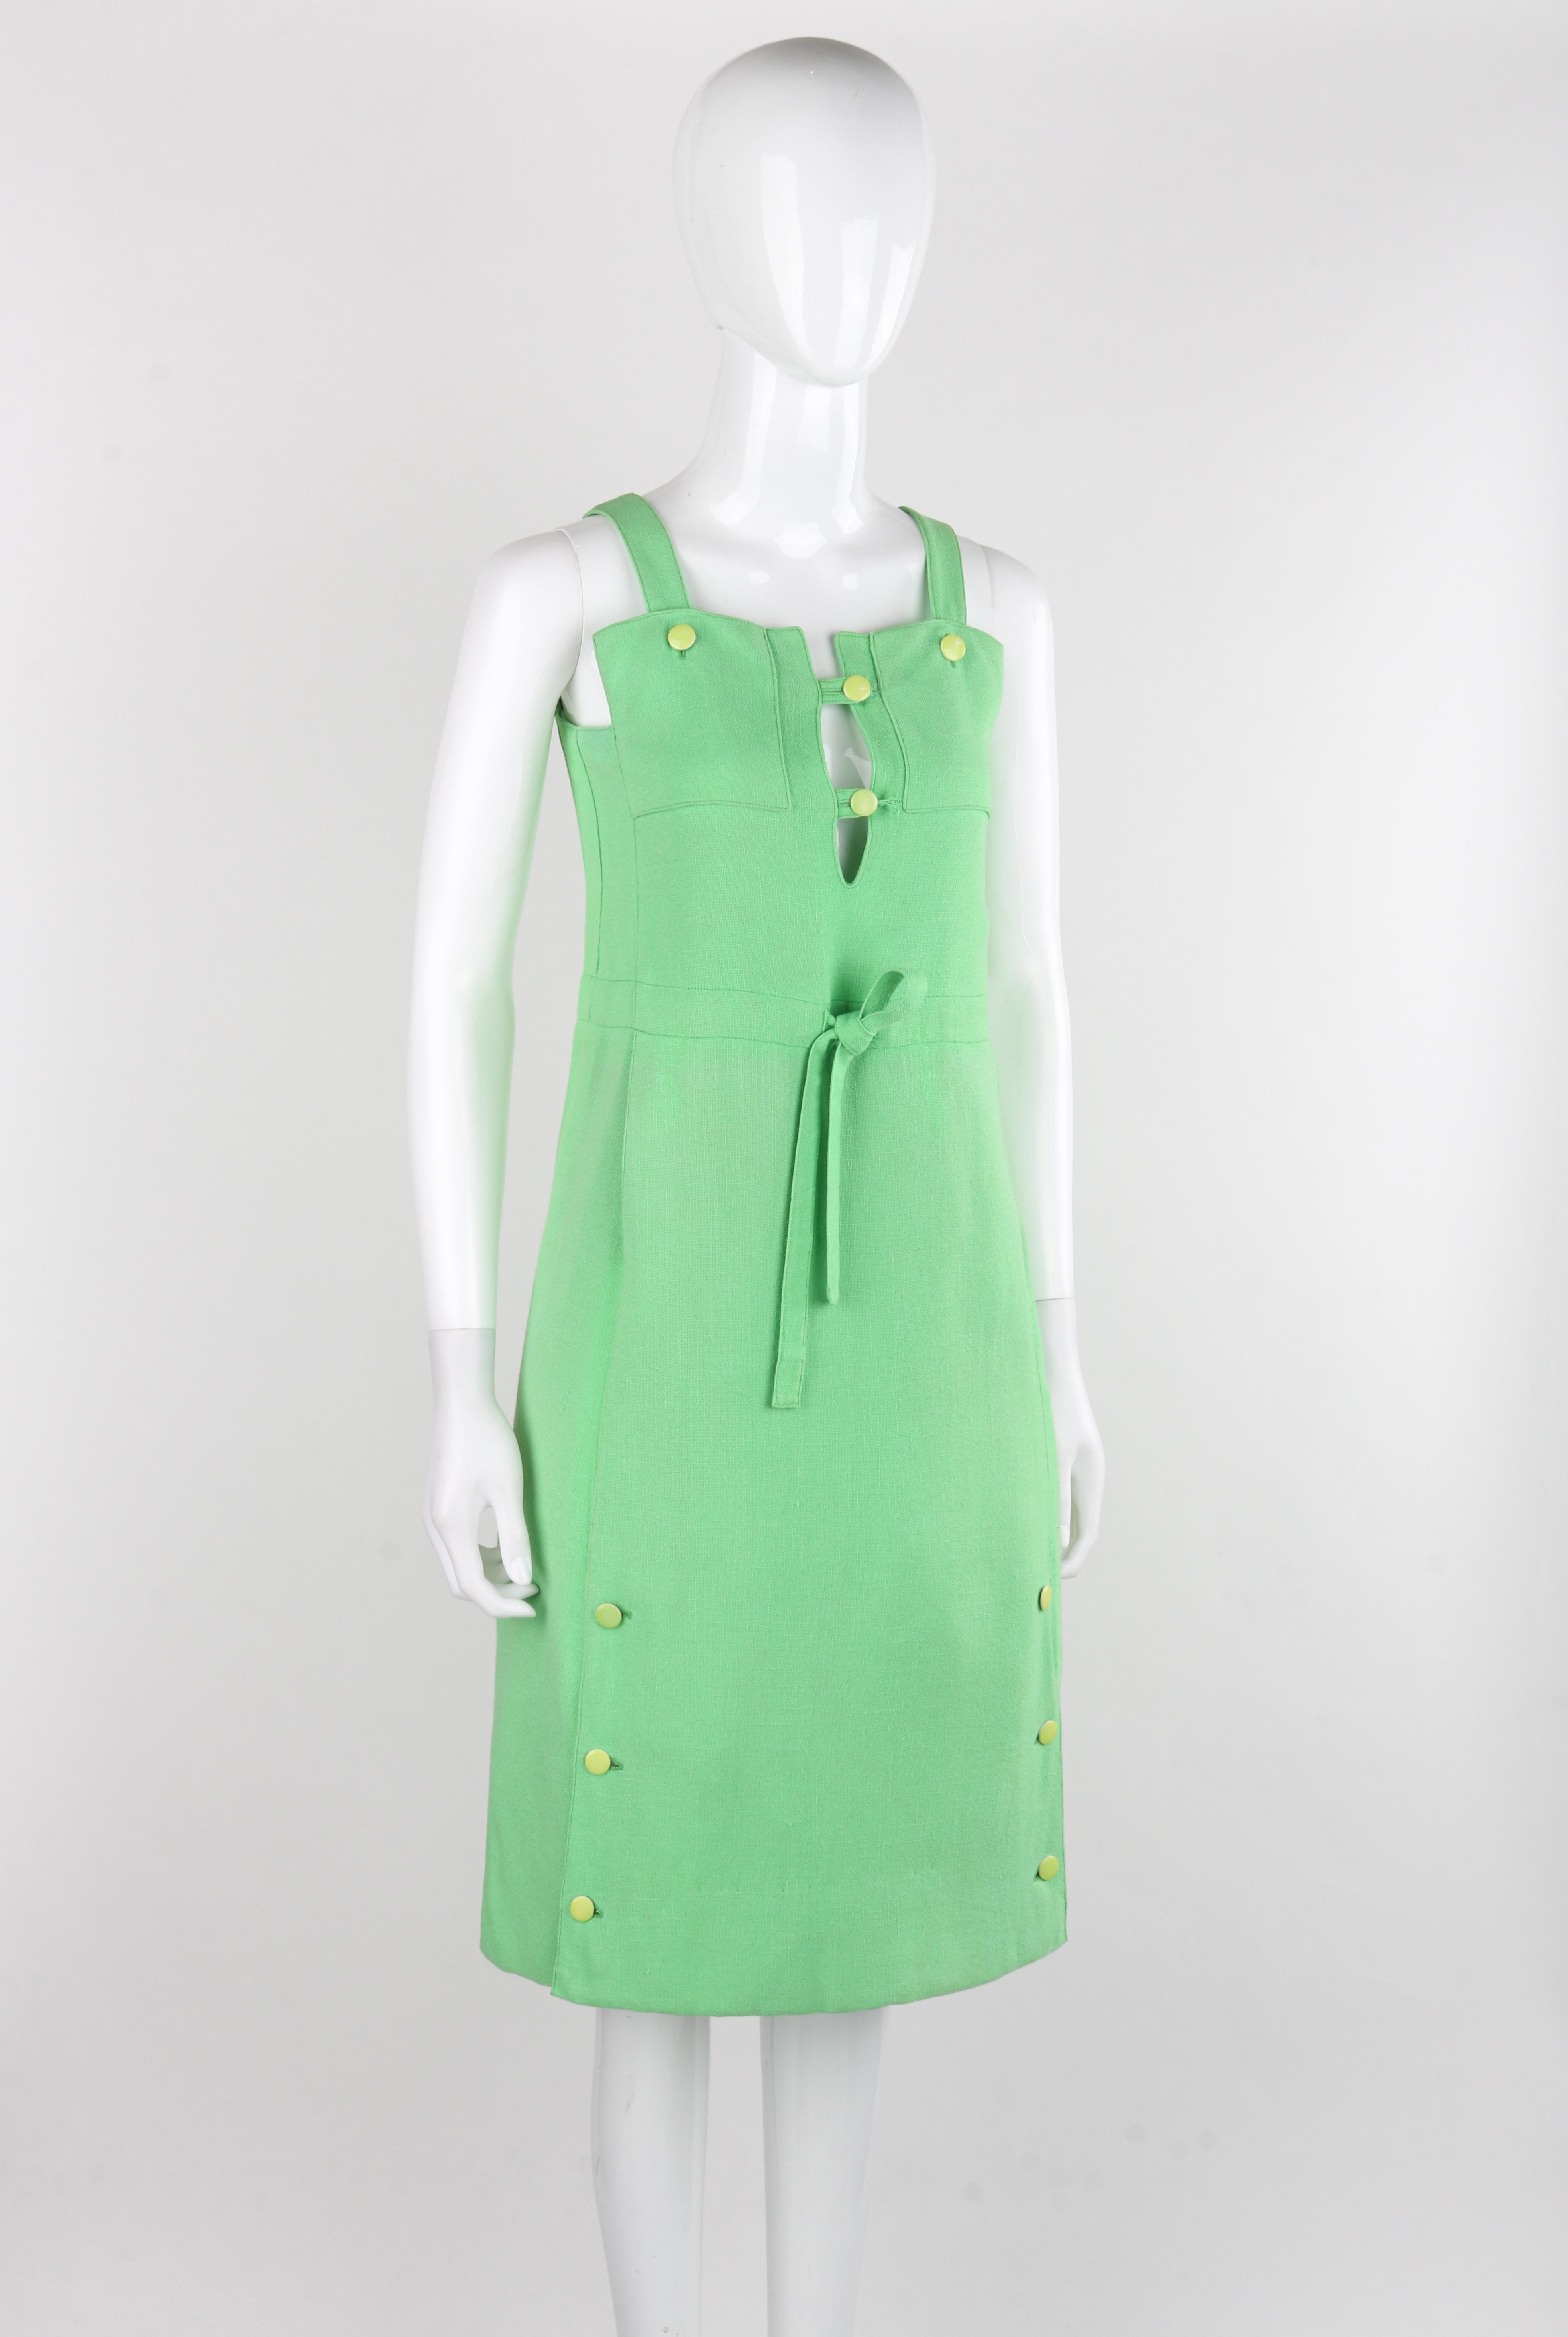 Women's COURREGES Paris c.1960's Vtg Mint Green Tie Front Overall Midi Day Dress For Sale